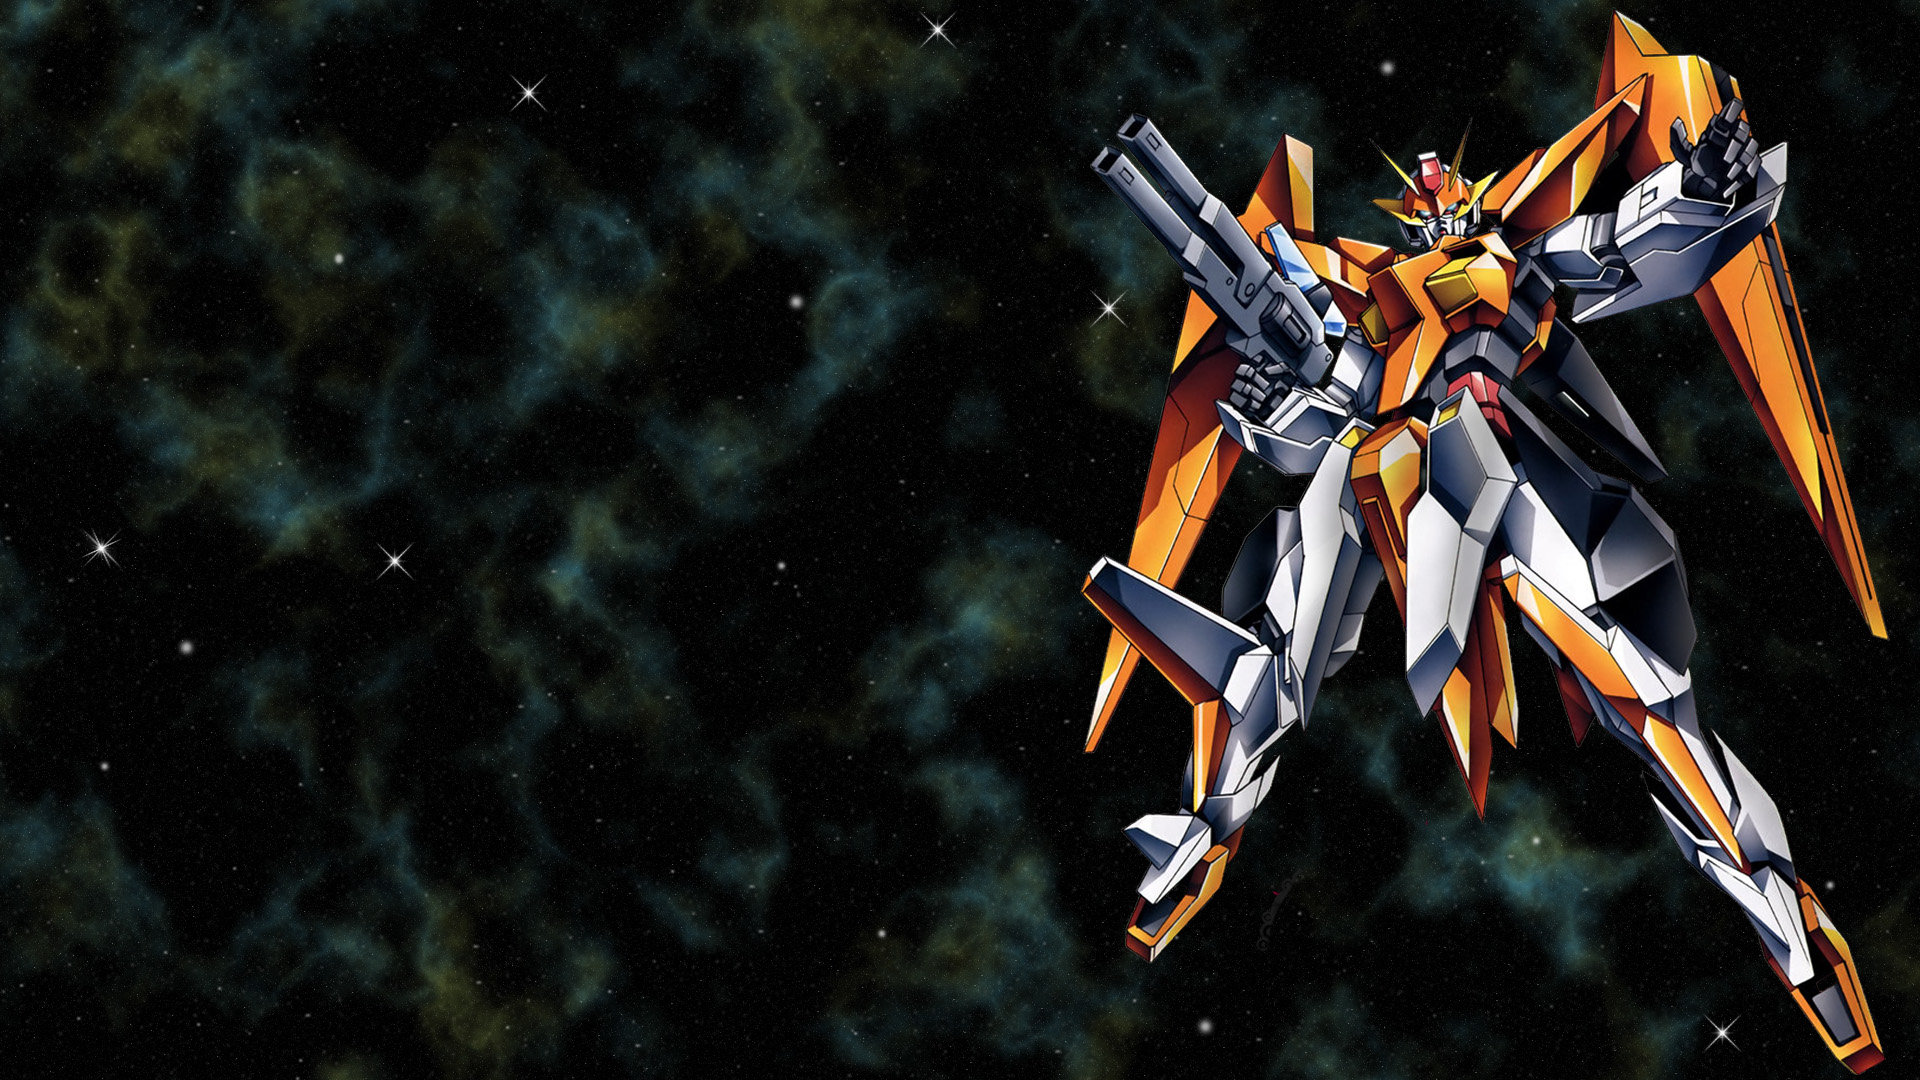 Download hd 1920x1080 Gundam desktop background ID:115217 for free